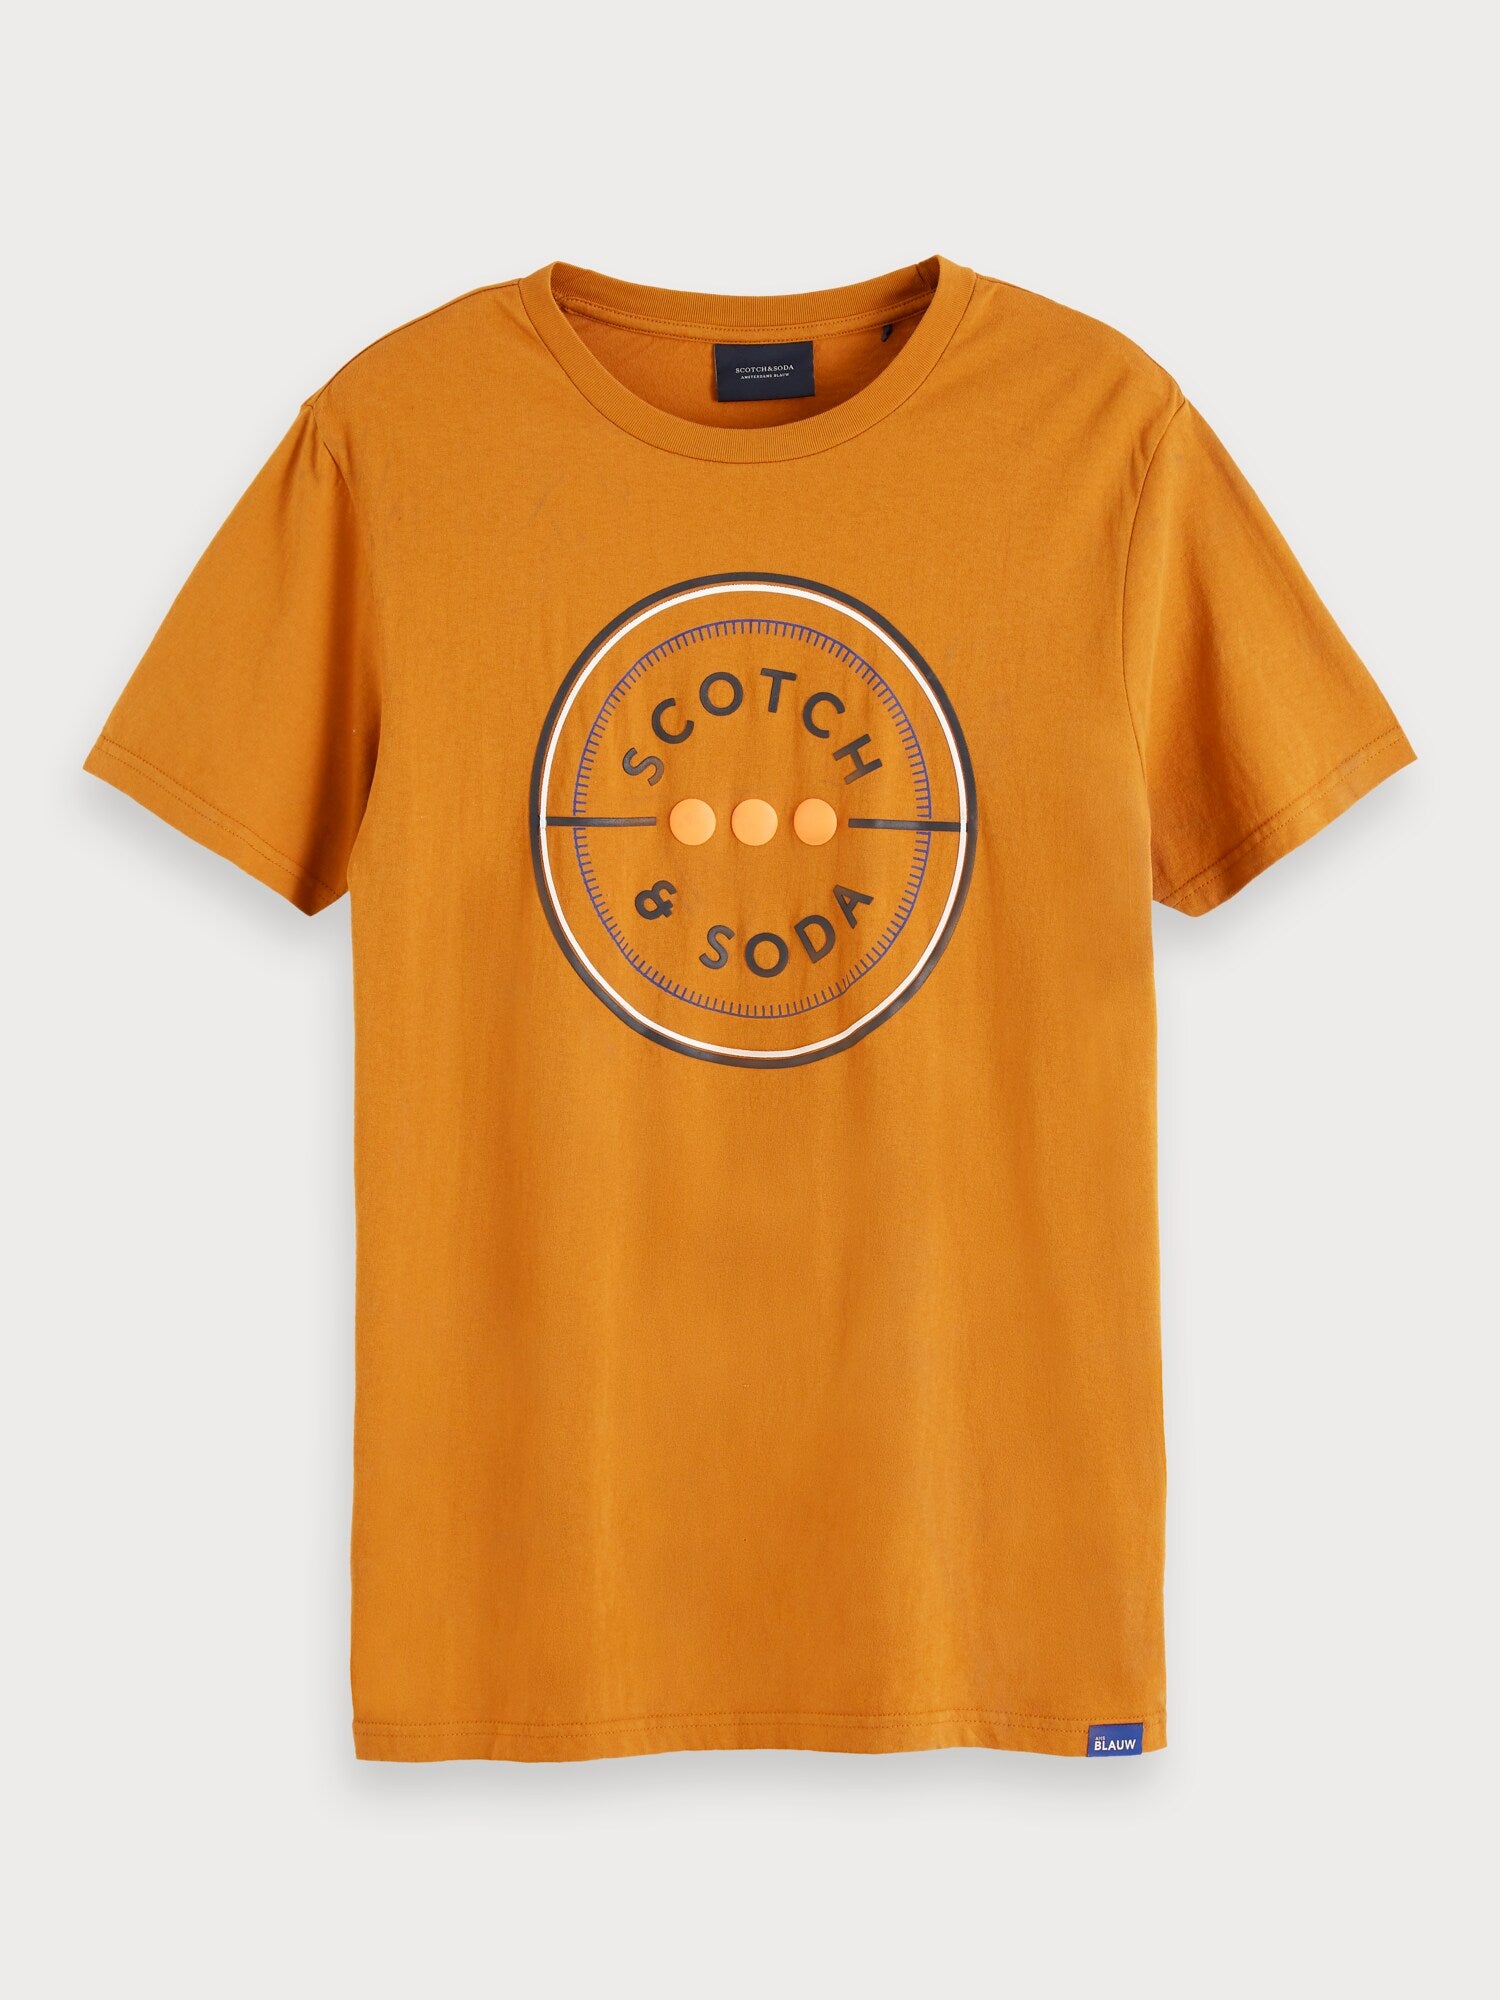 Scotch and Soda | Logo Artwork T-Shirt in Orange | Scotch Select